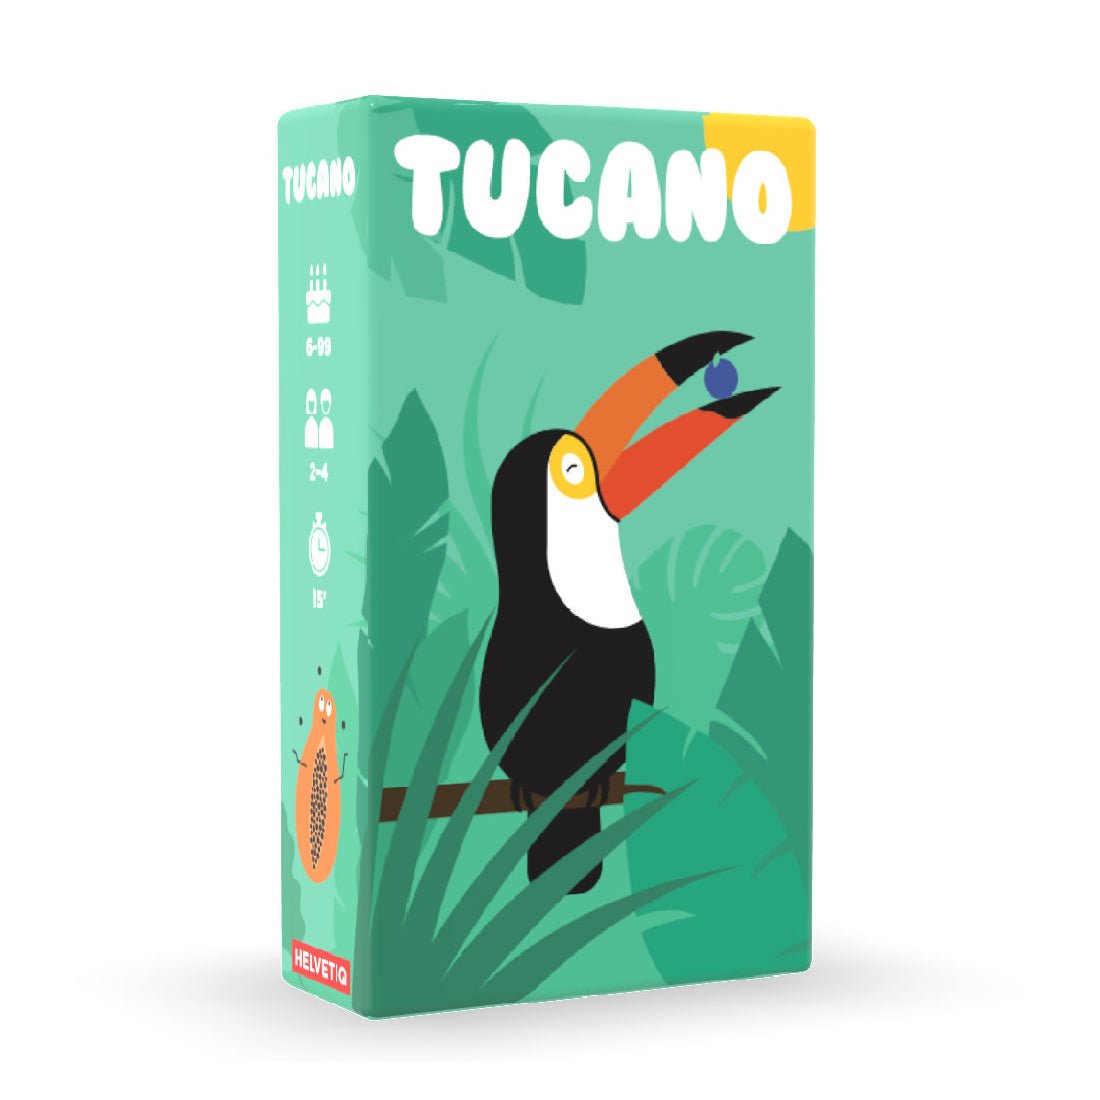 Tucano Game - لعبة - Store 974 | ستور ٩٧٤